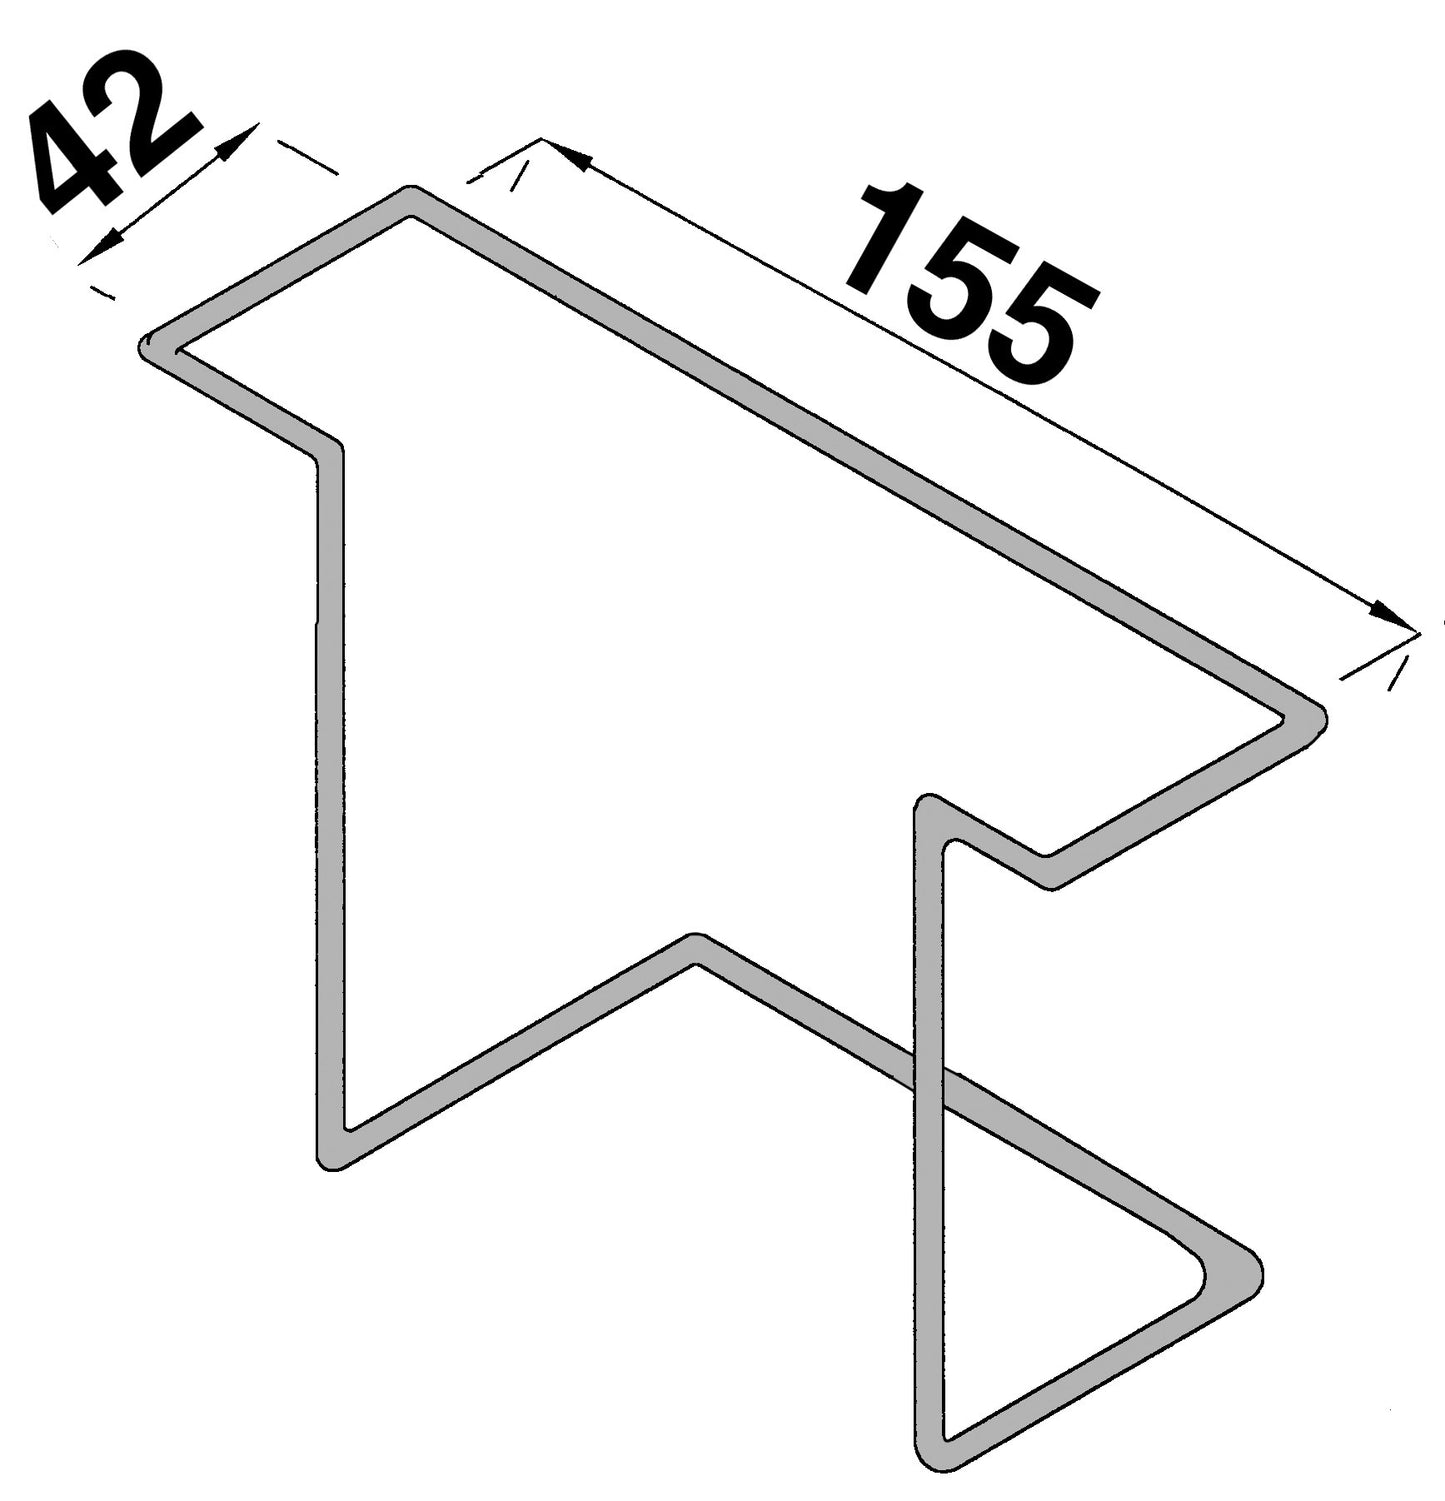 A5 Wall Rack Leaflet Holder fits Floor Display or Slatwall-A5WI